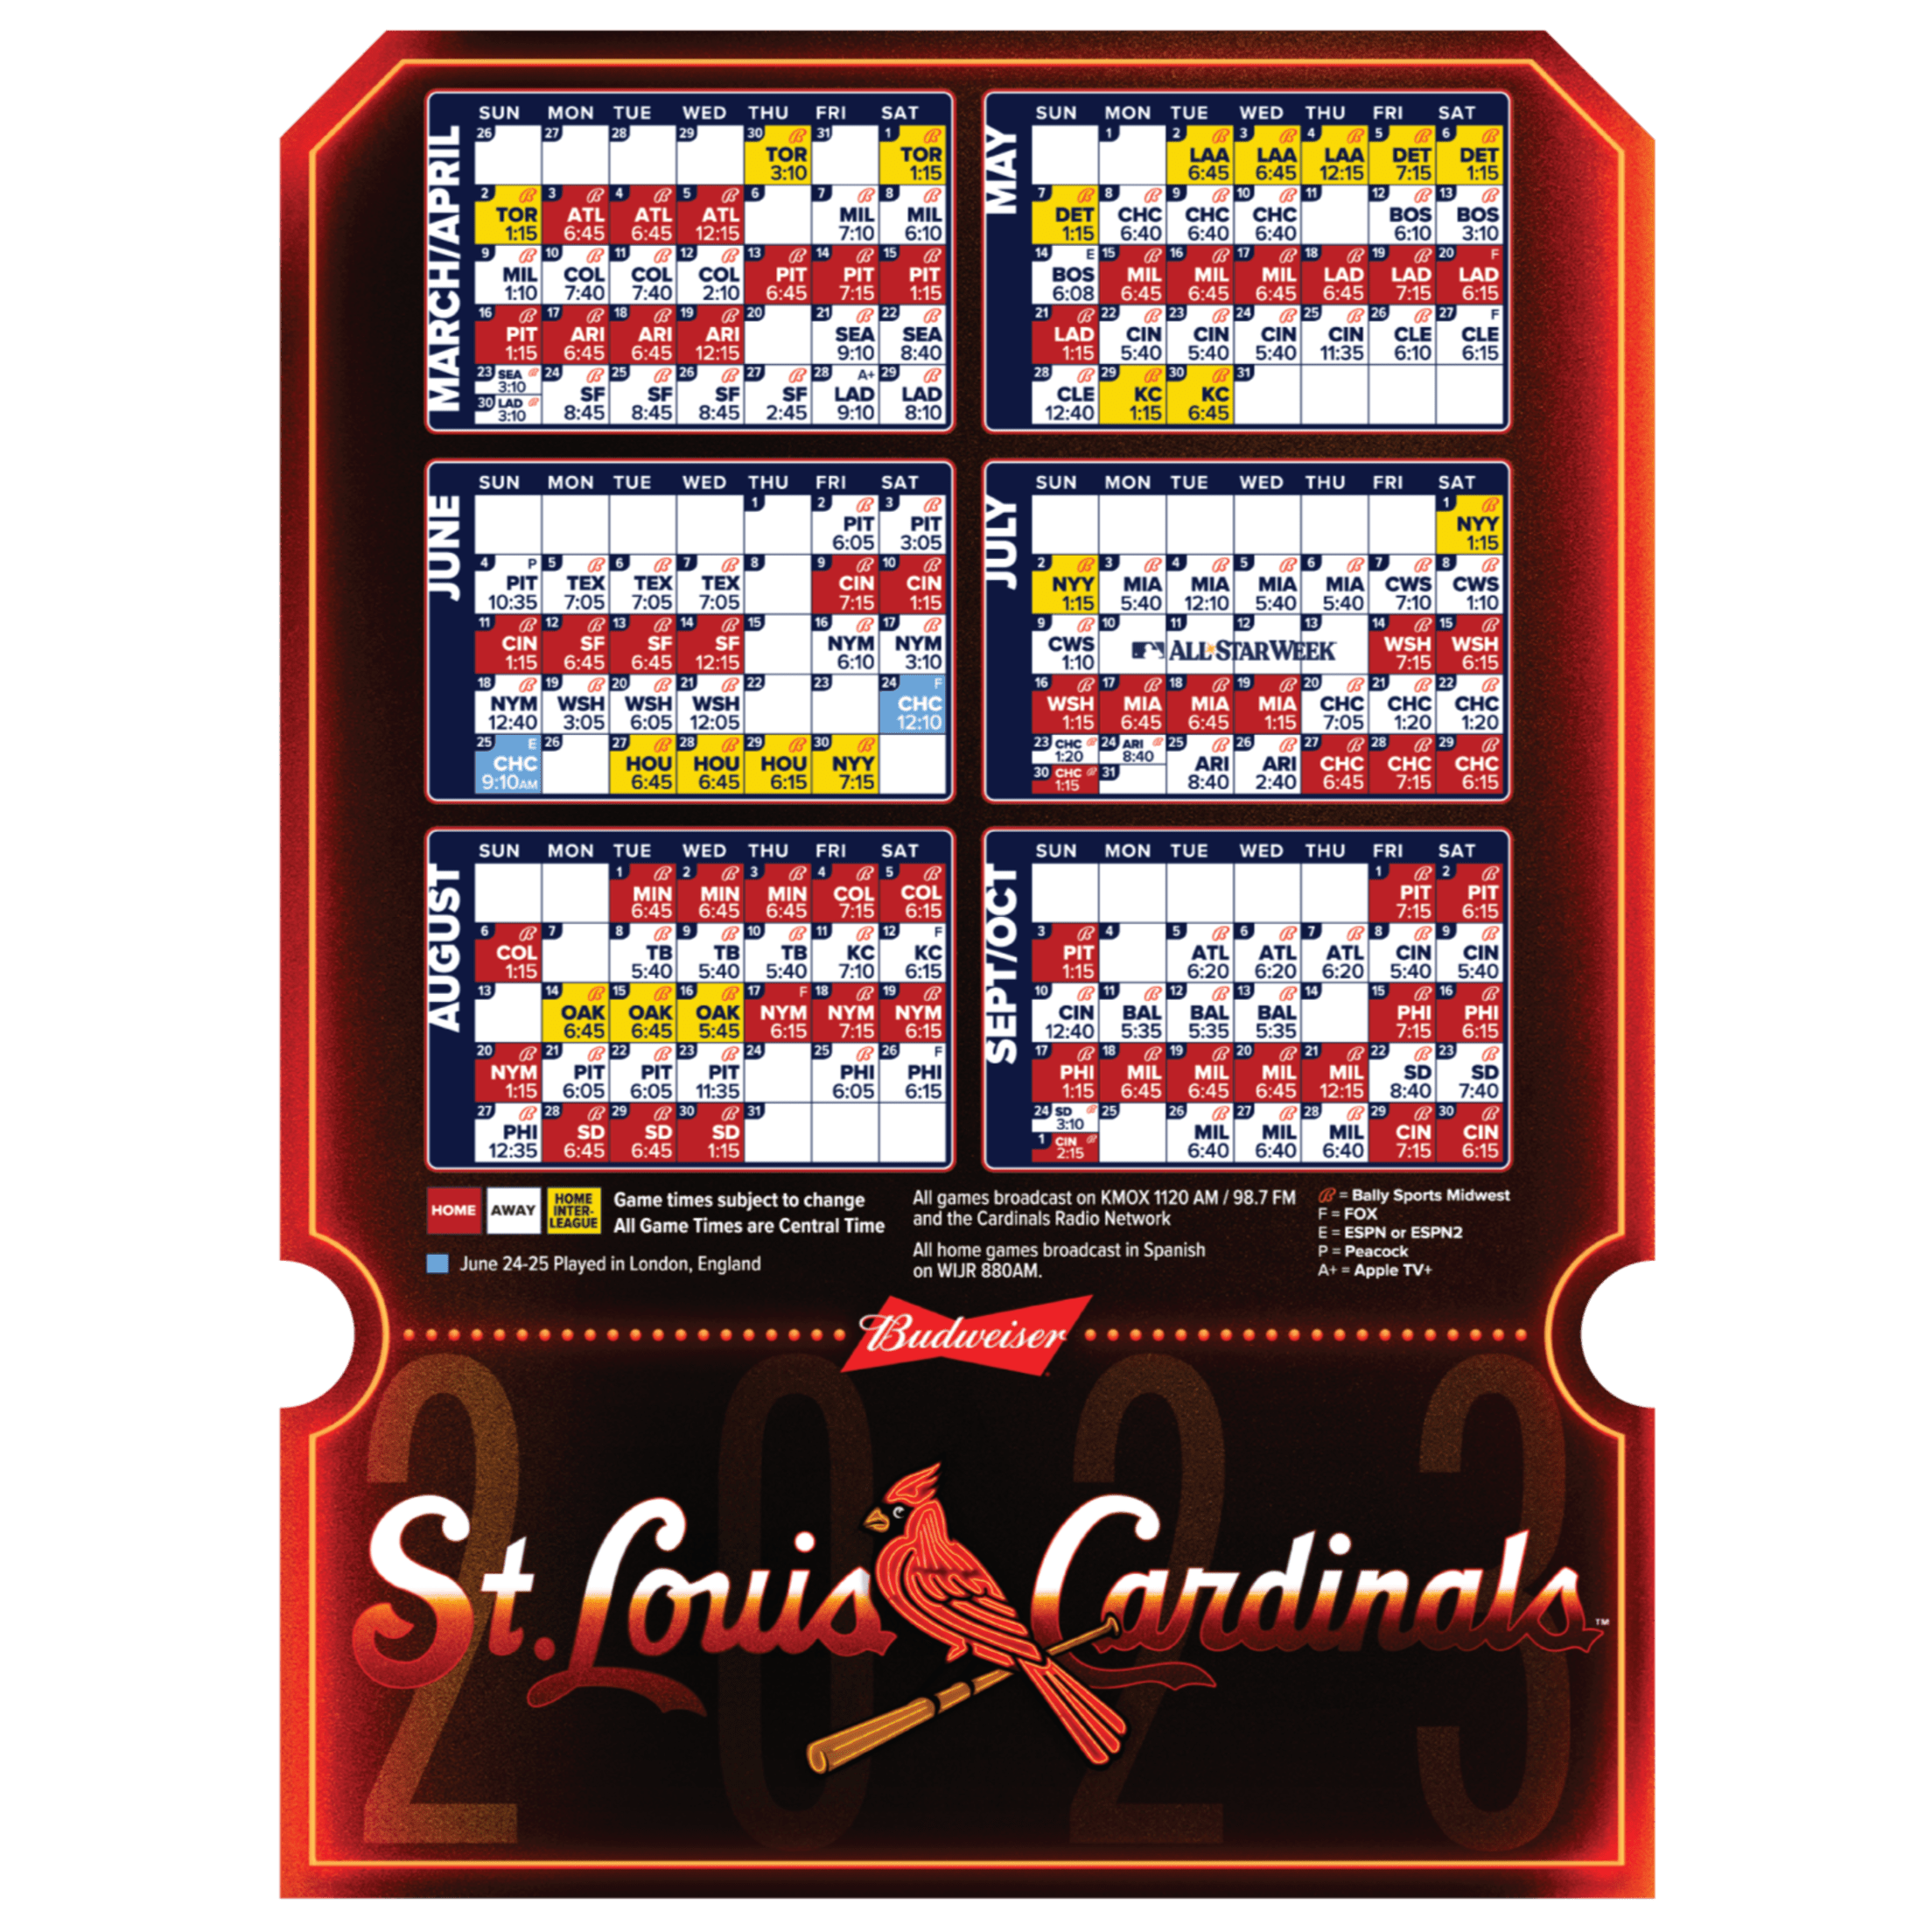 arizona cardinals schedule 2022